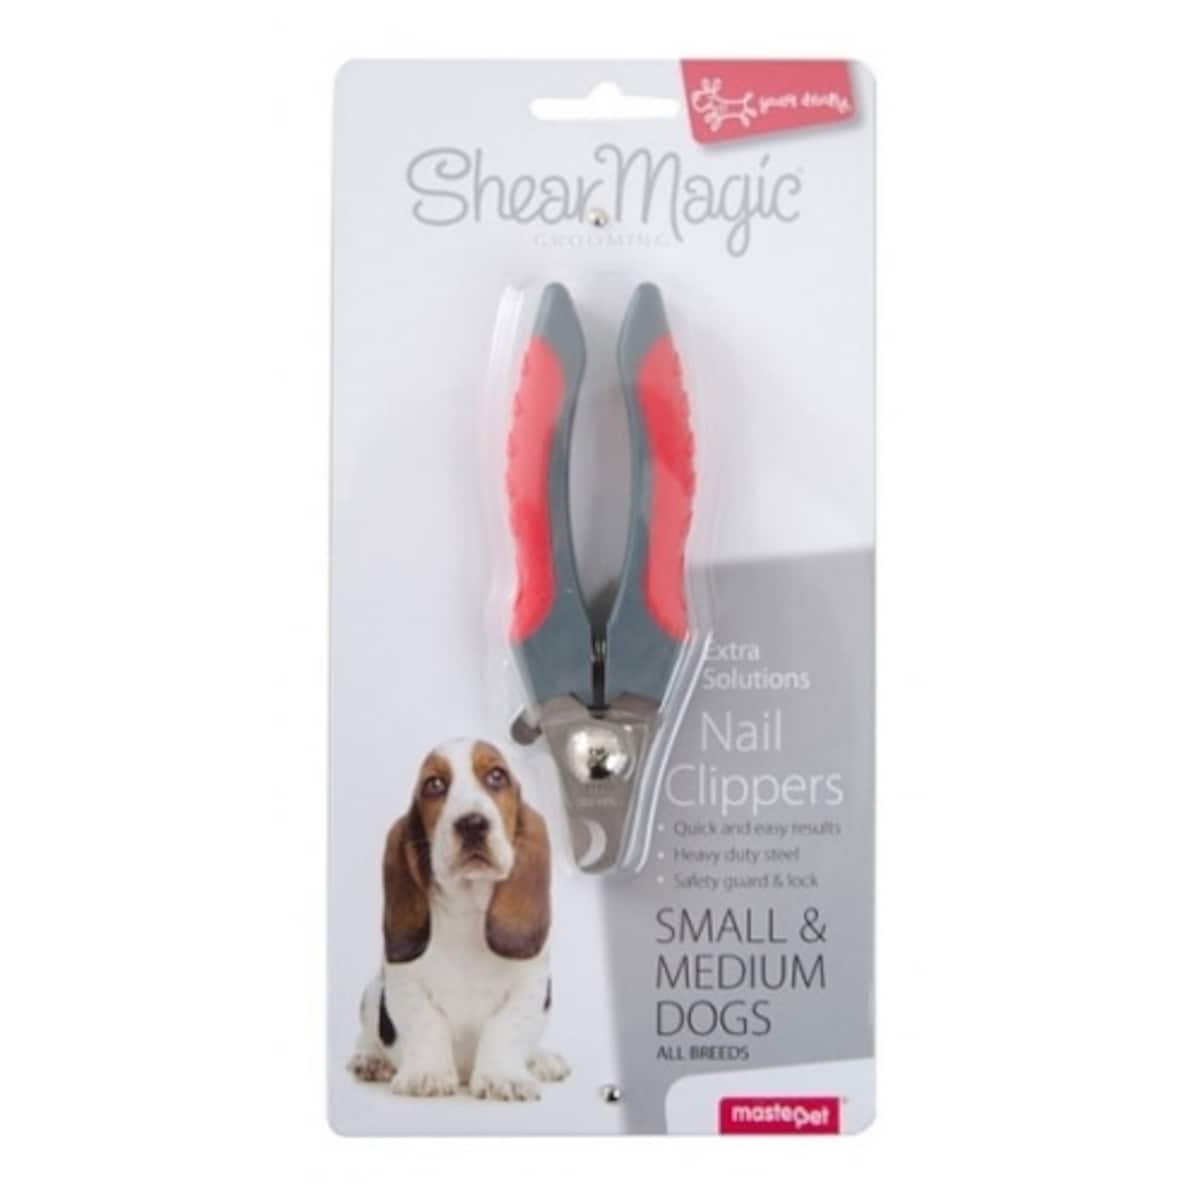 Shear Magic Nail Clippers Small Medium Dogs